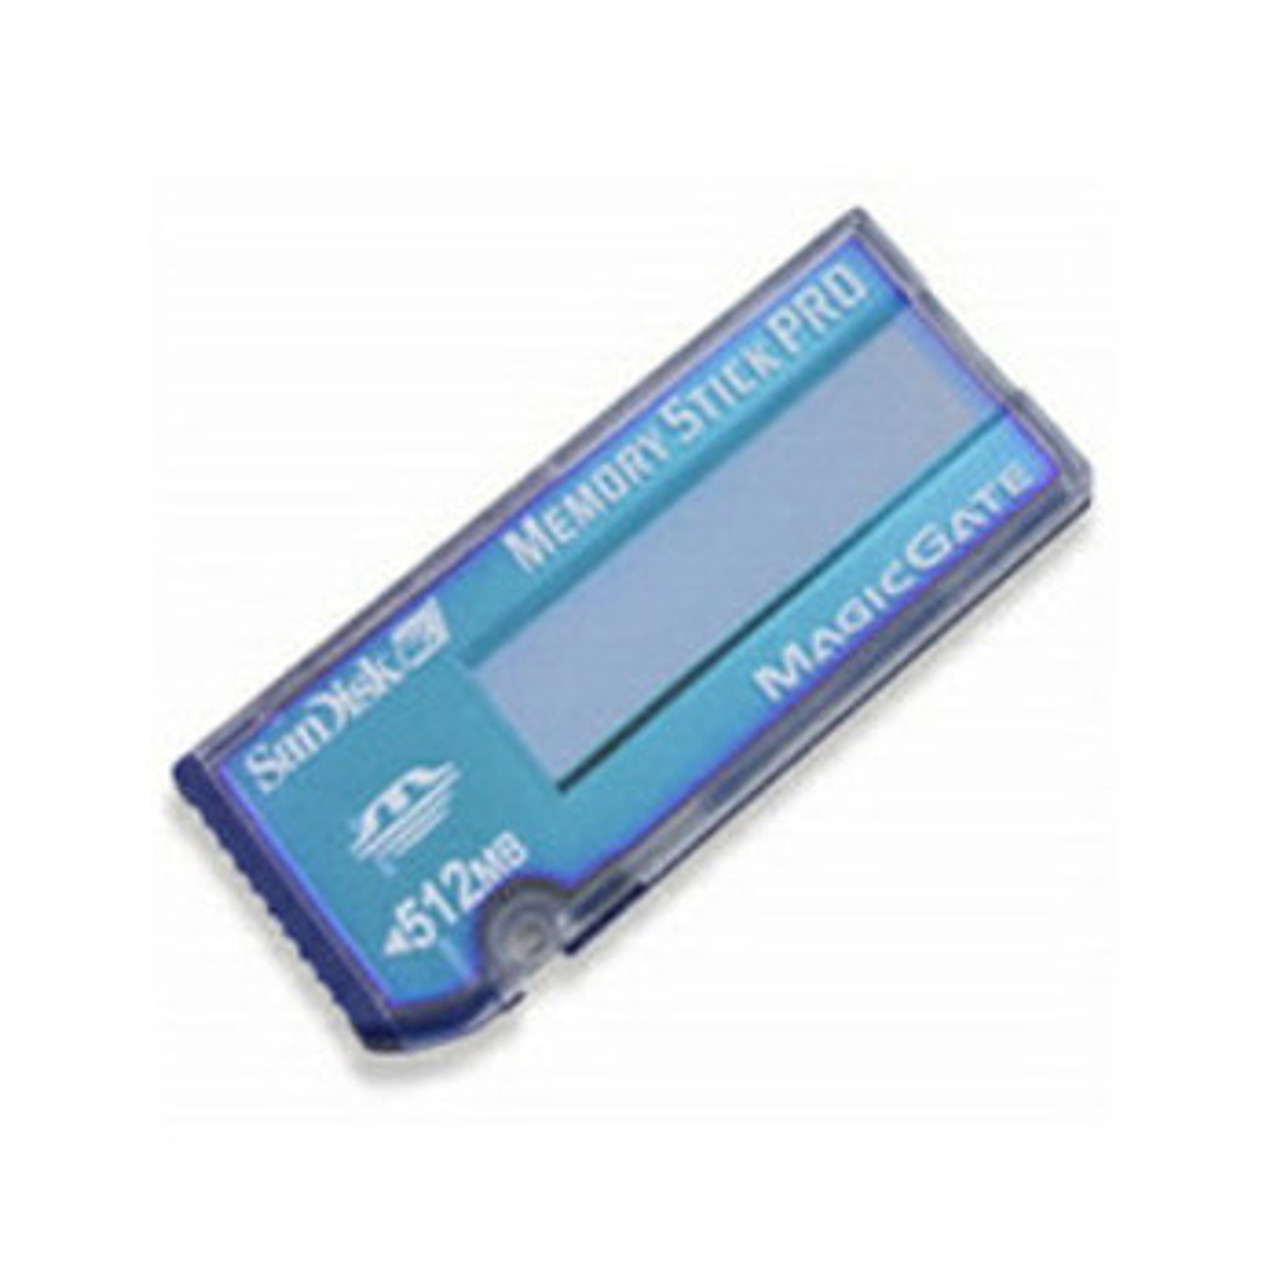 SDMSP-512-822 | Sandisk | 512Mb Megicgate Memory Stick Pro